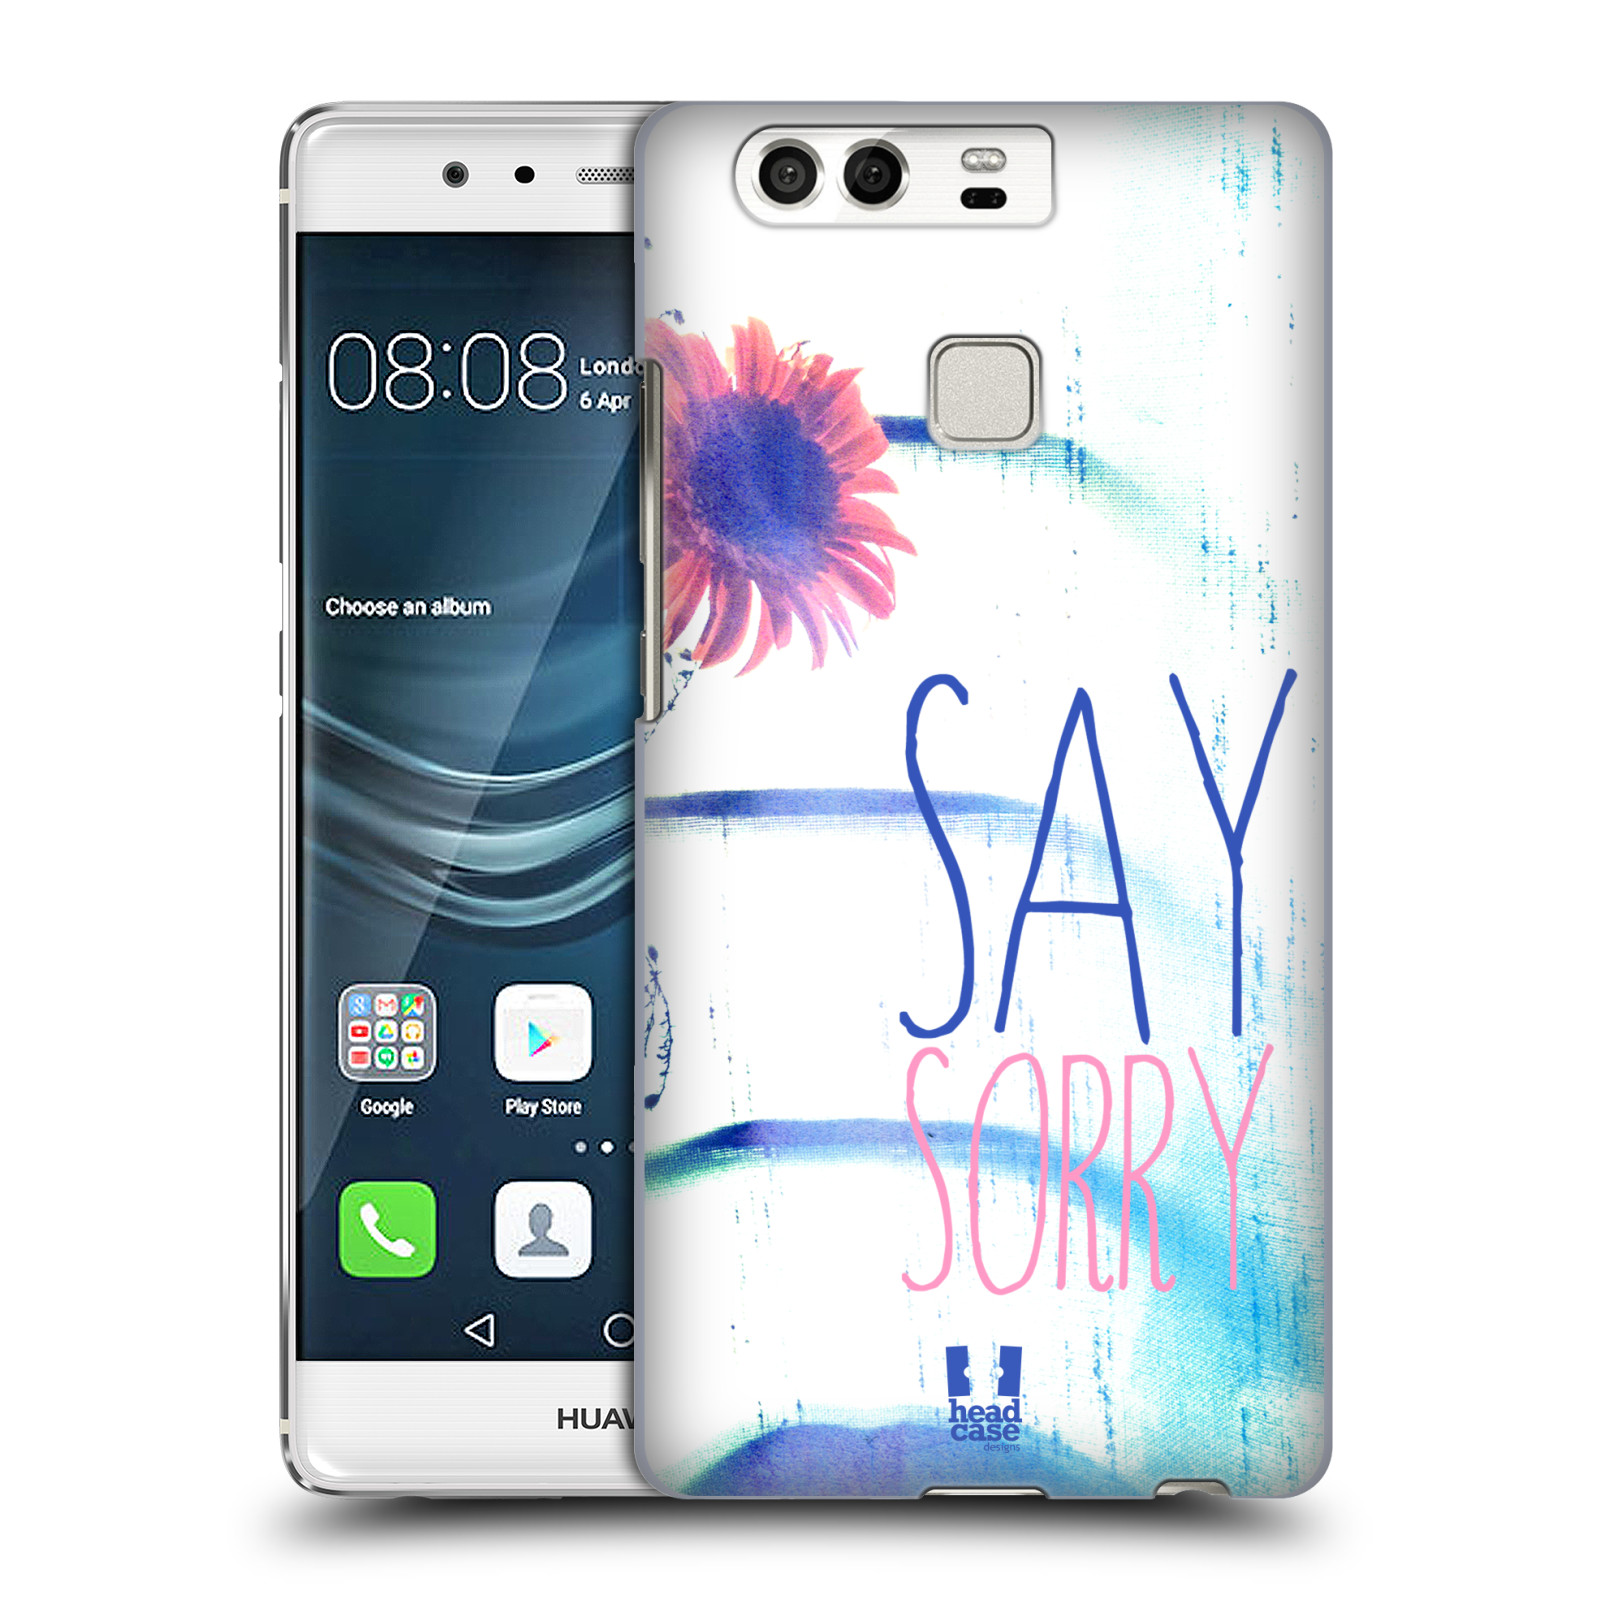 HEAD CASE plastový obal na mobil Huawei P9 / P9 DUAL SIM vzor Pozitivní vlny MODRÁ, růžová květina SAY SORRY